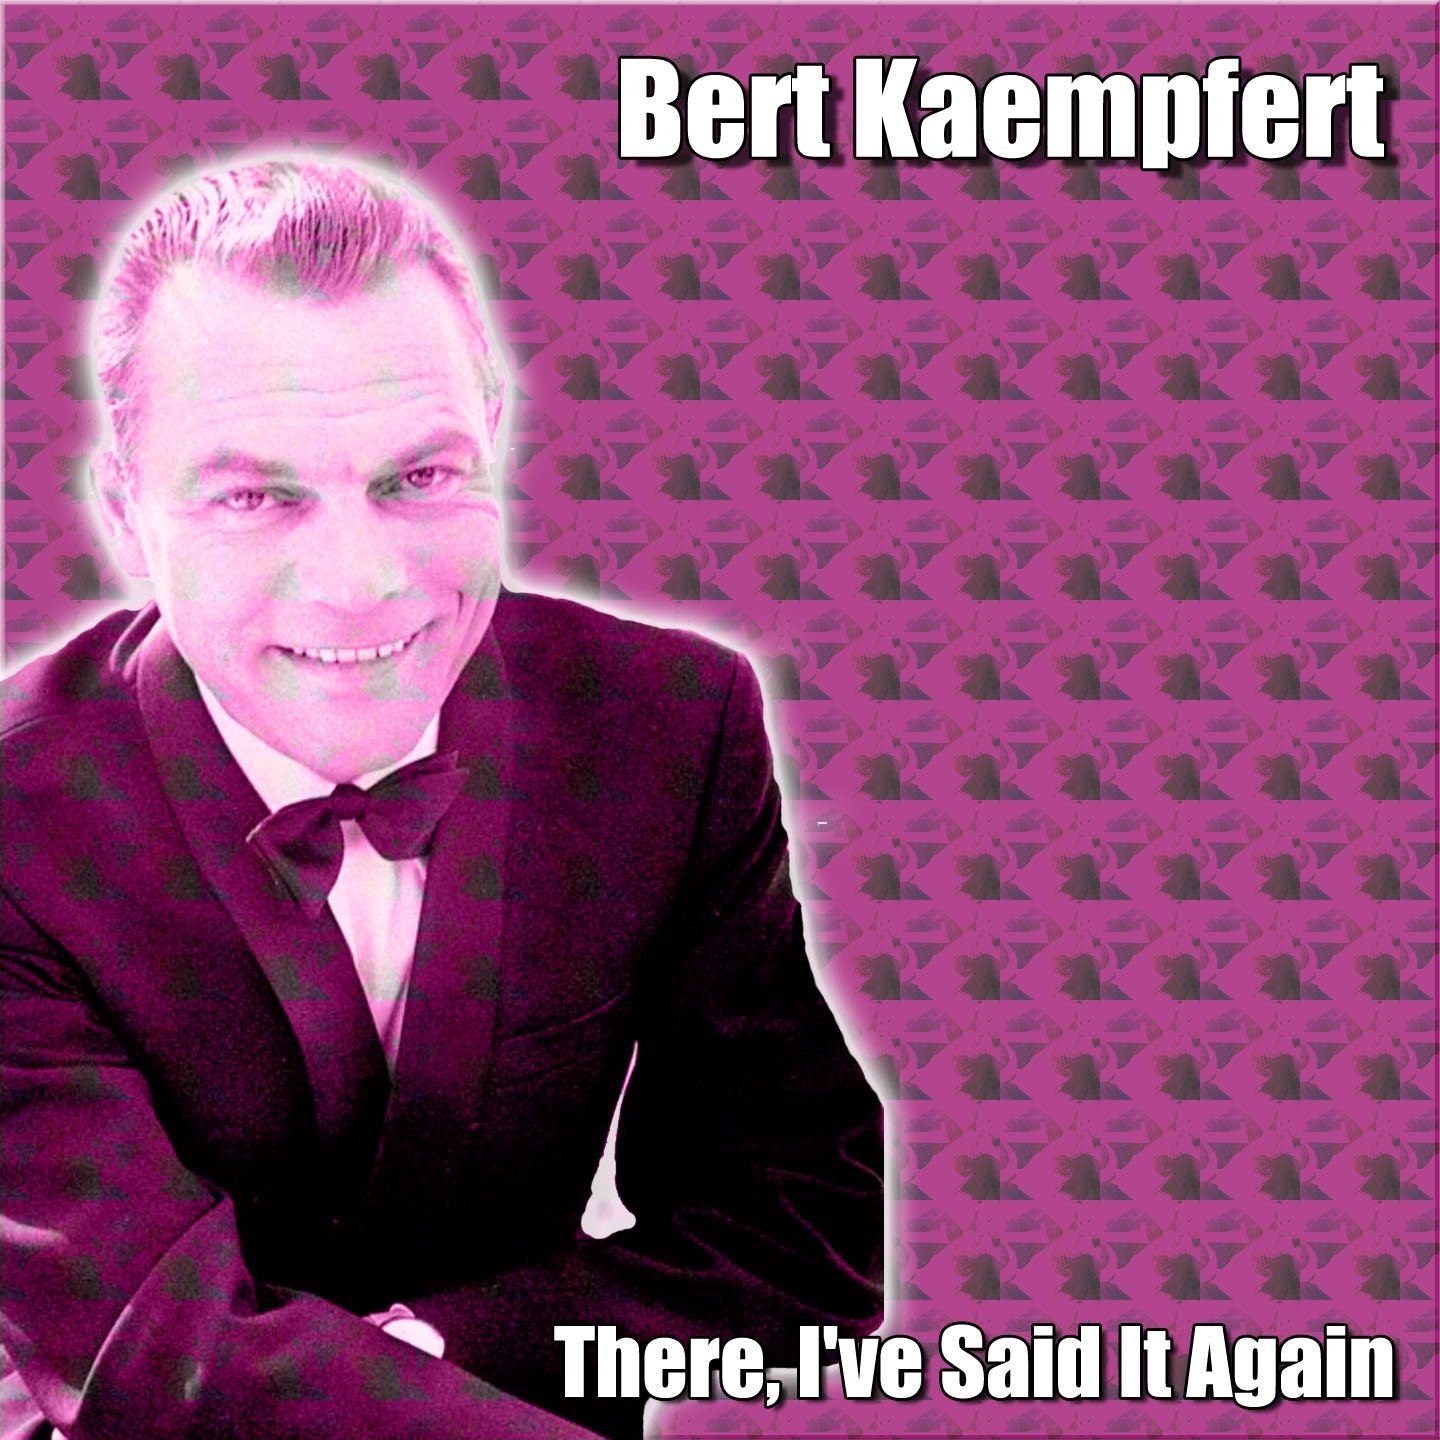 You said it again. Берт Кемпферт немецкий композитор.